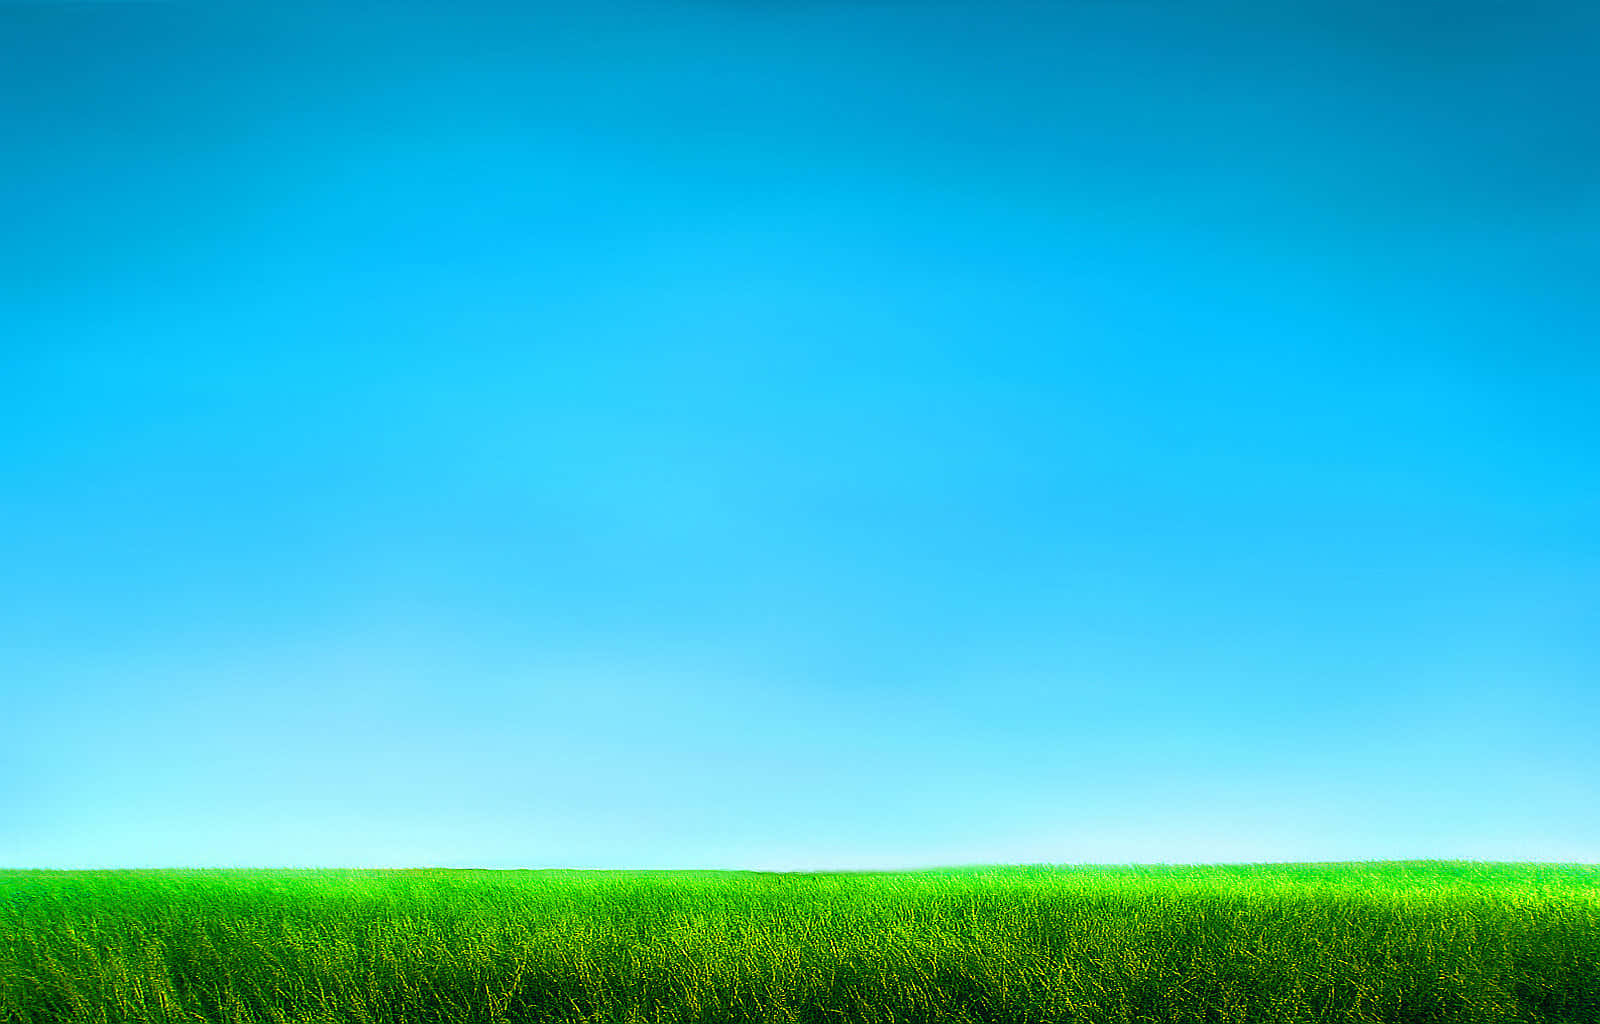 Vertical Landscape Grass And Sky Background